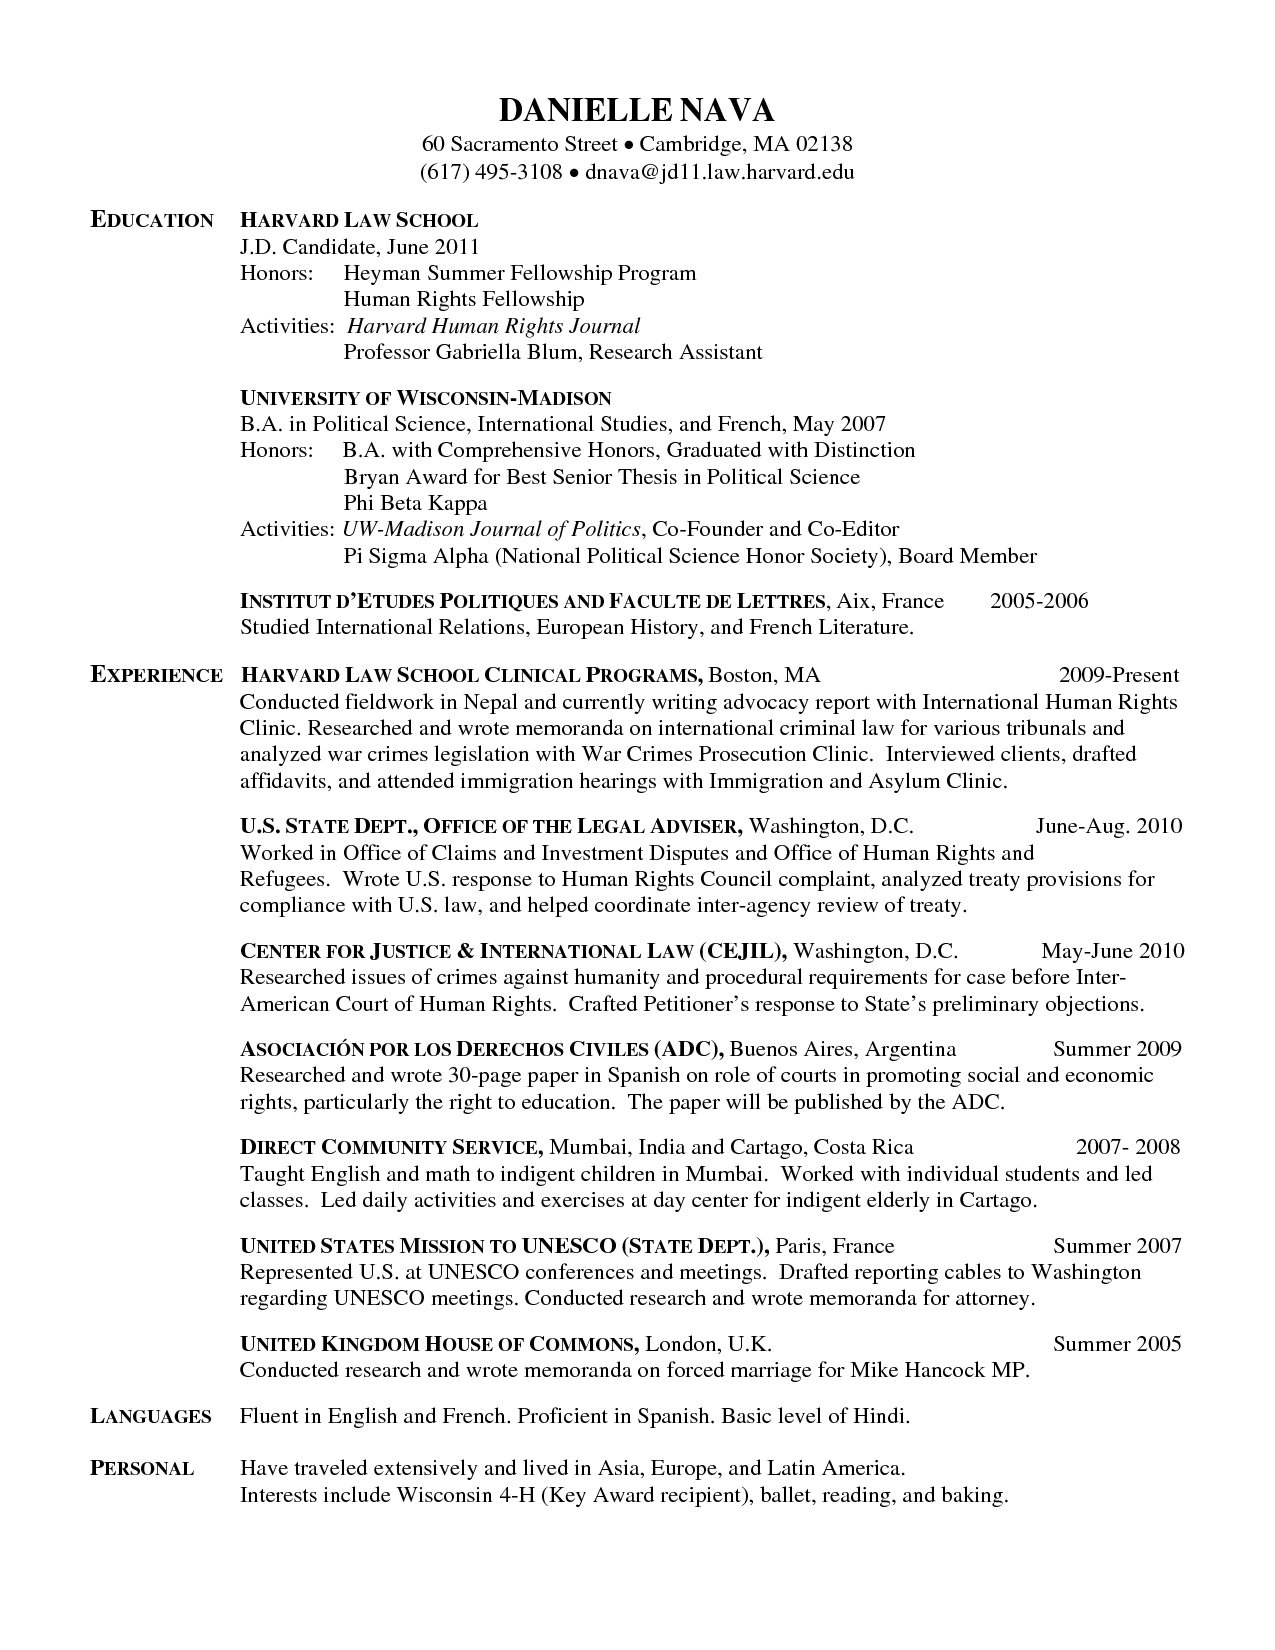 Resume Format Harvard Business School  